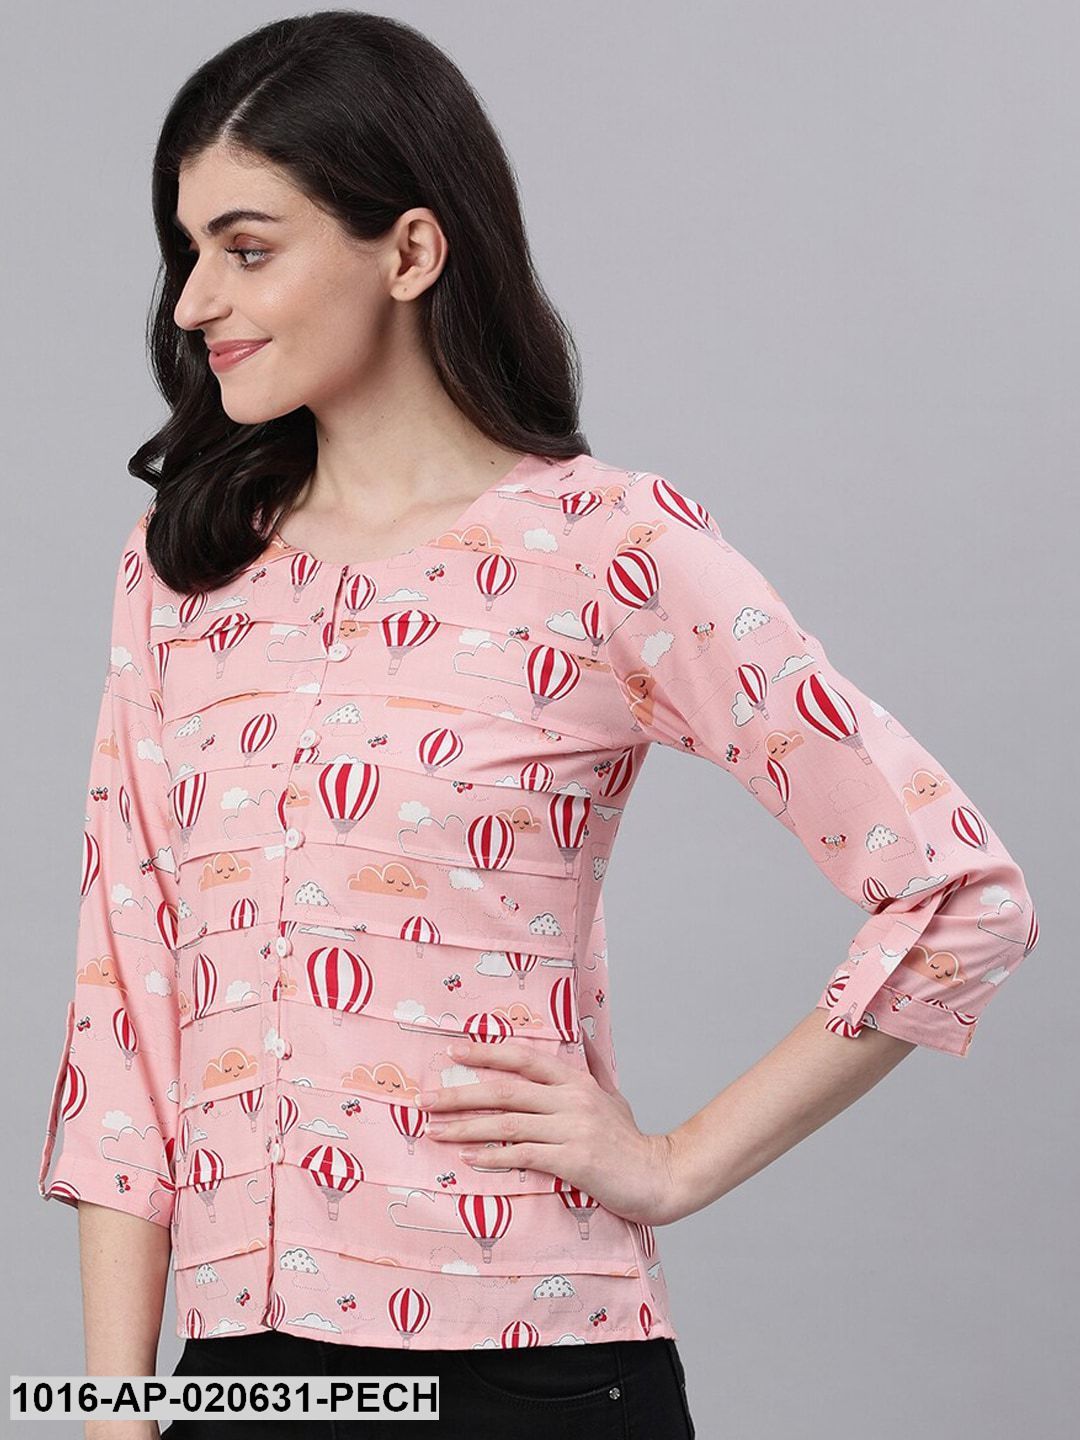 Peach-Coloured Printed Shirt Style Top